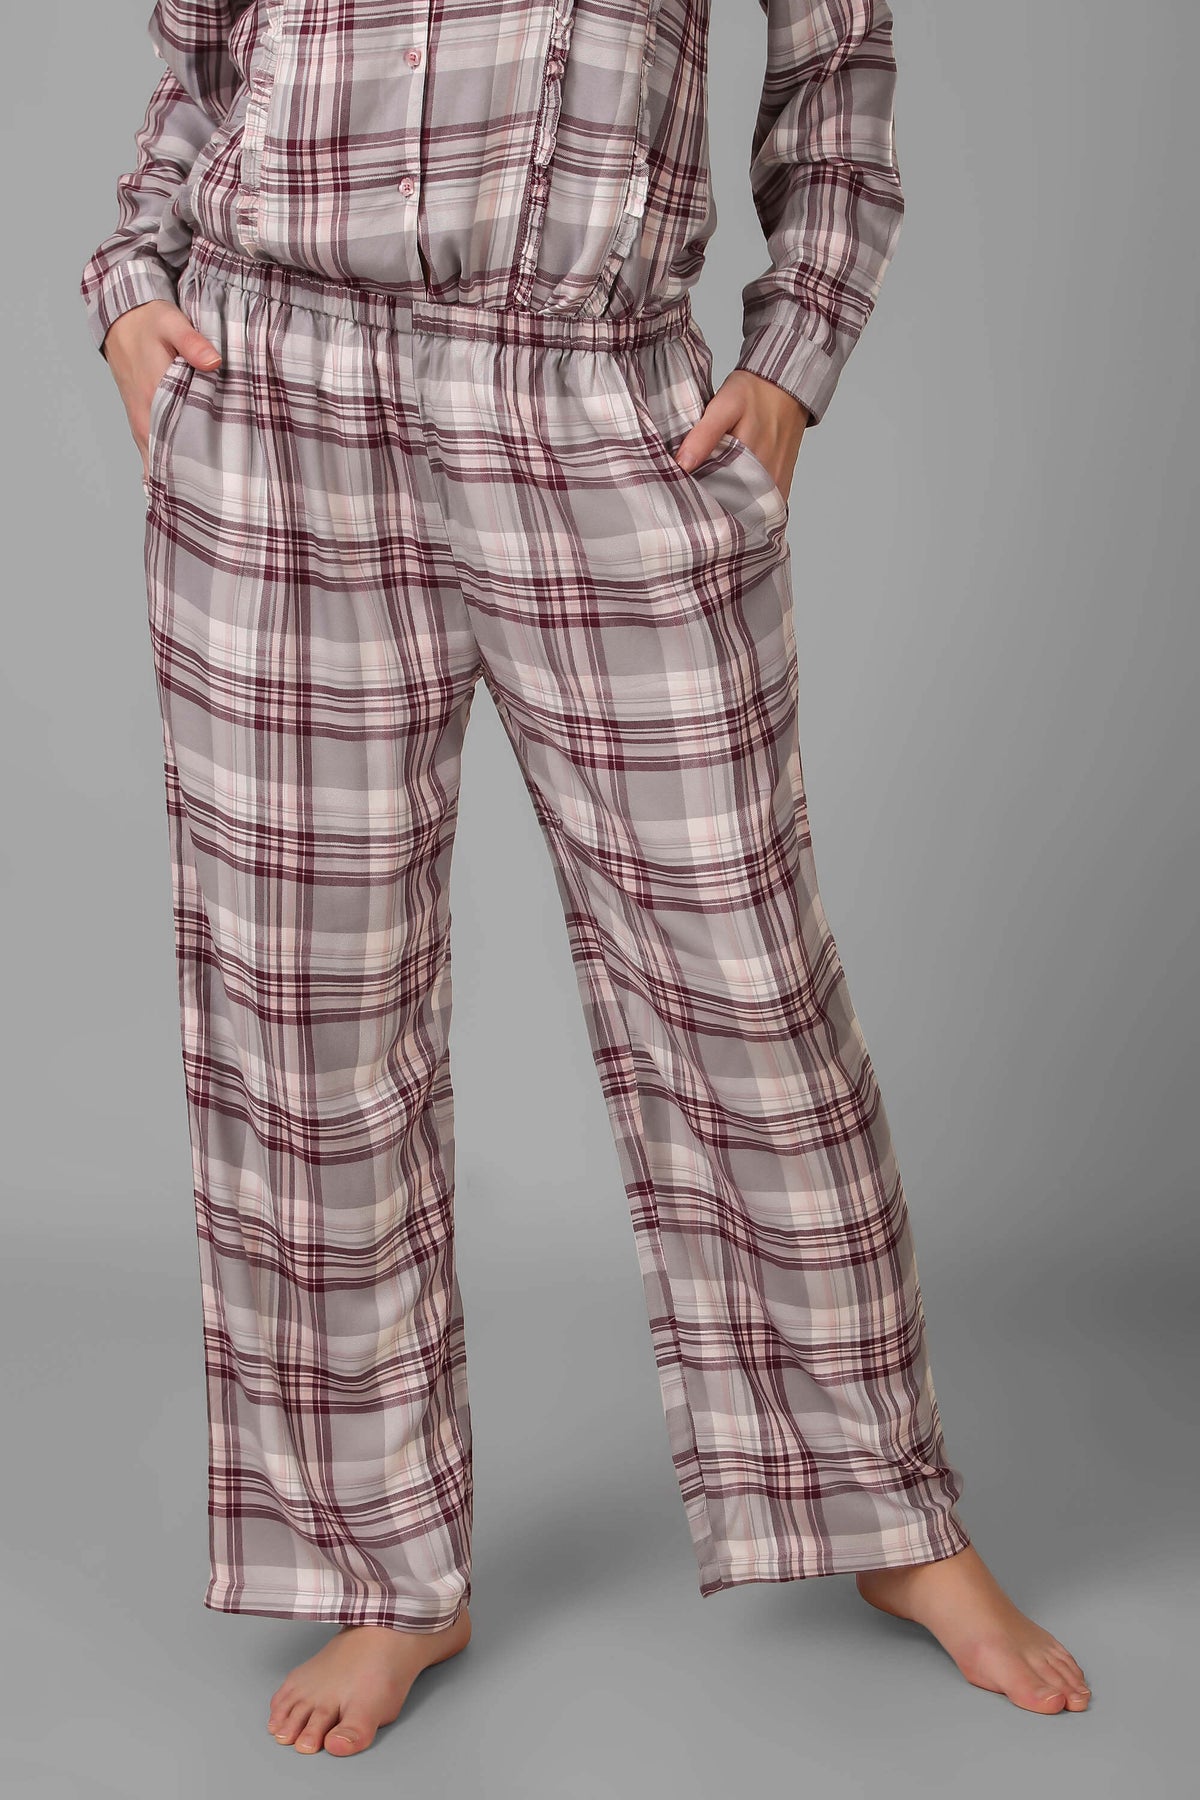 Hilary, Pyjama Suit